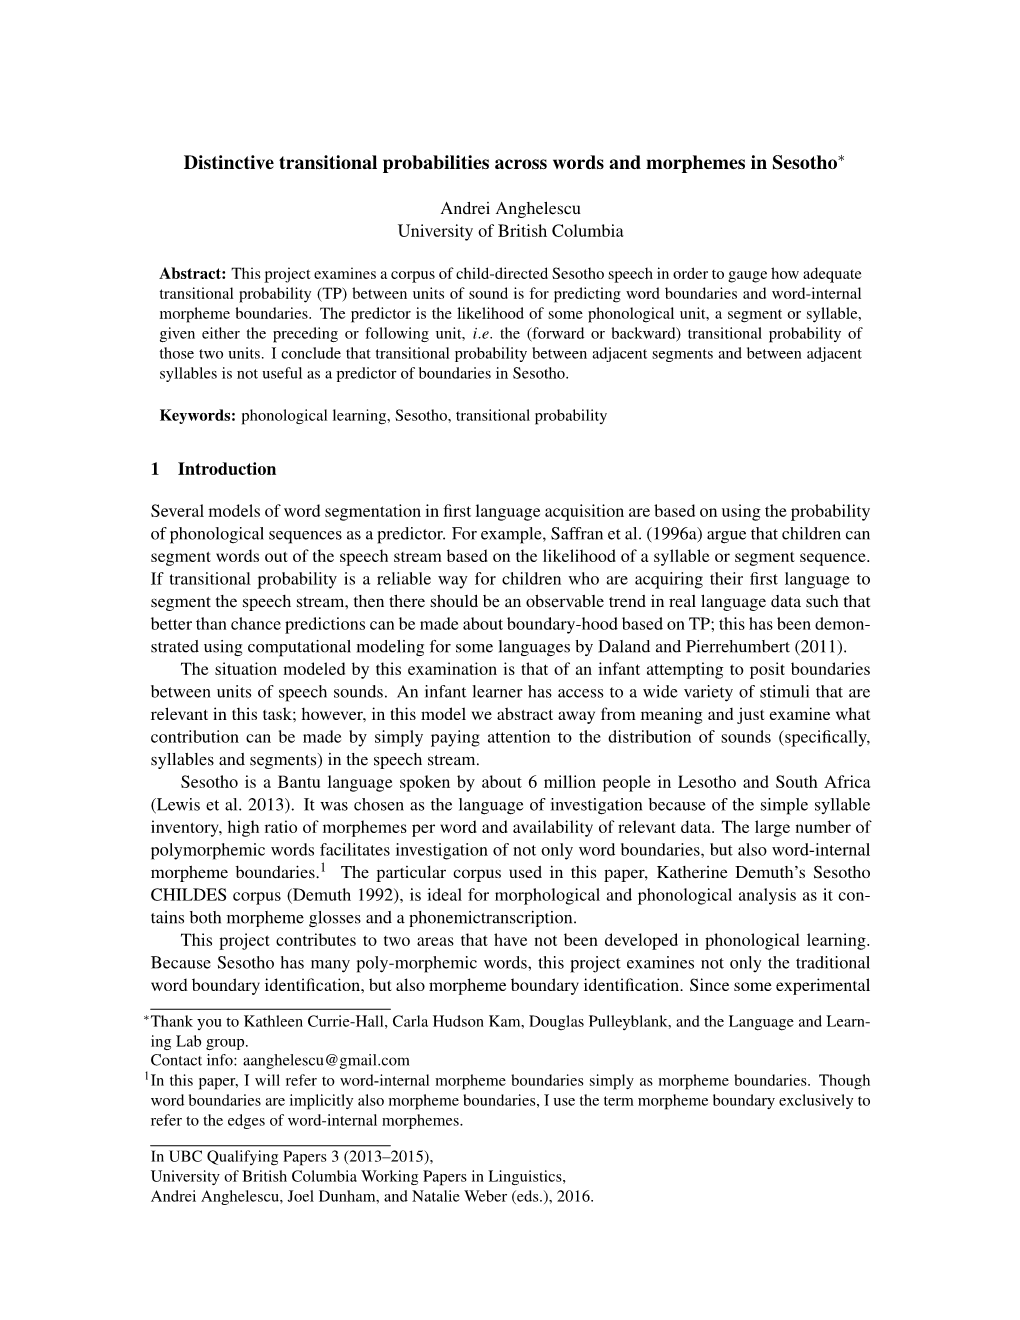 Anghelescu, Andrei, “Distinctive Transitional Probabilities Across